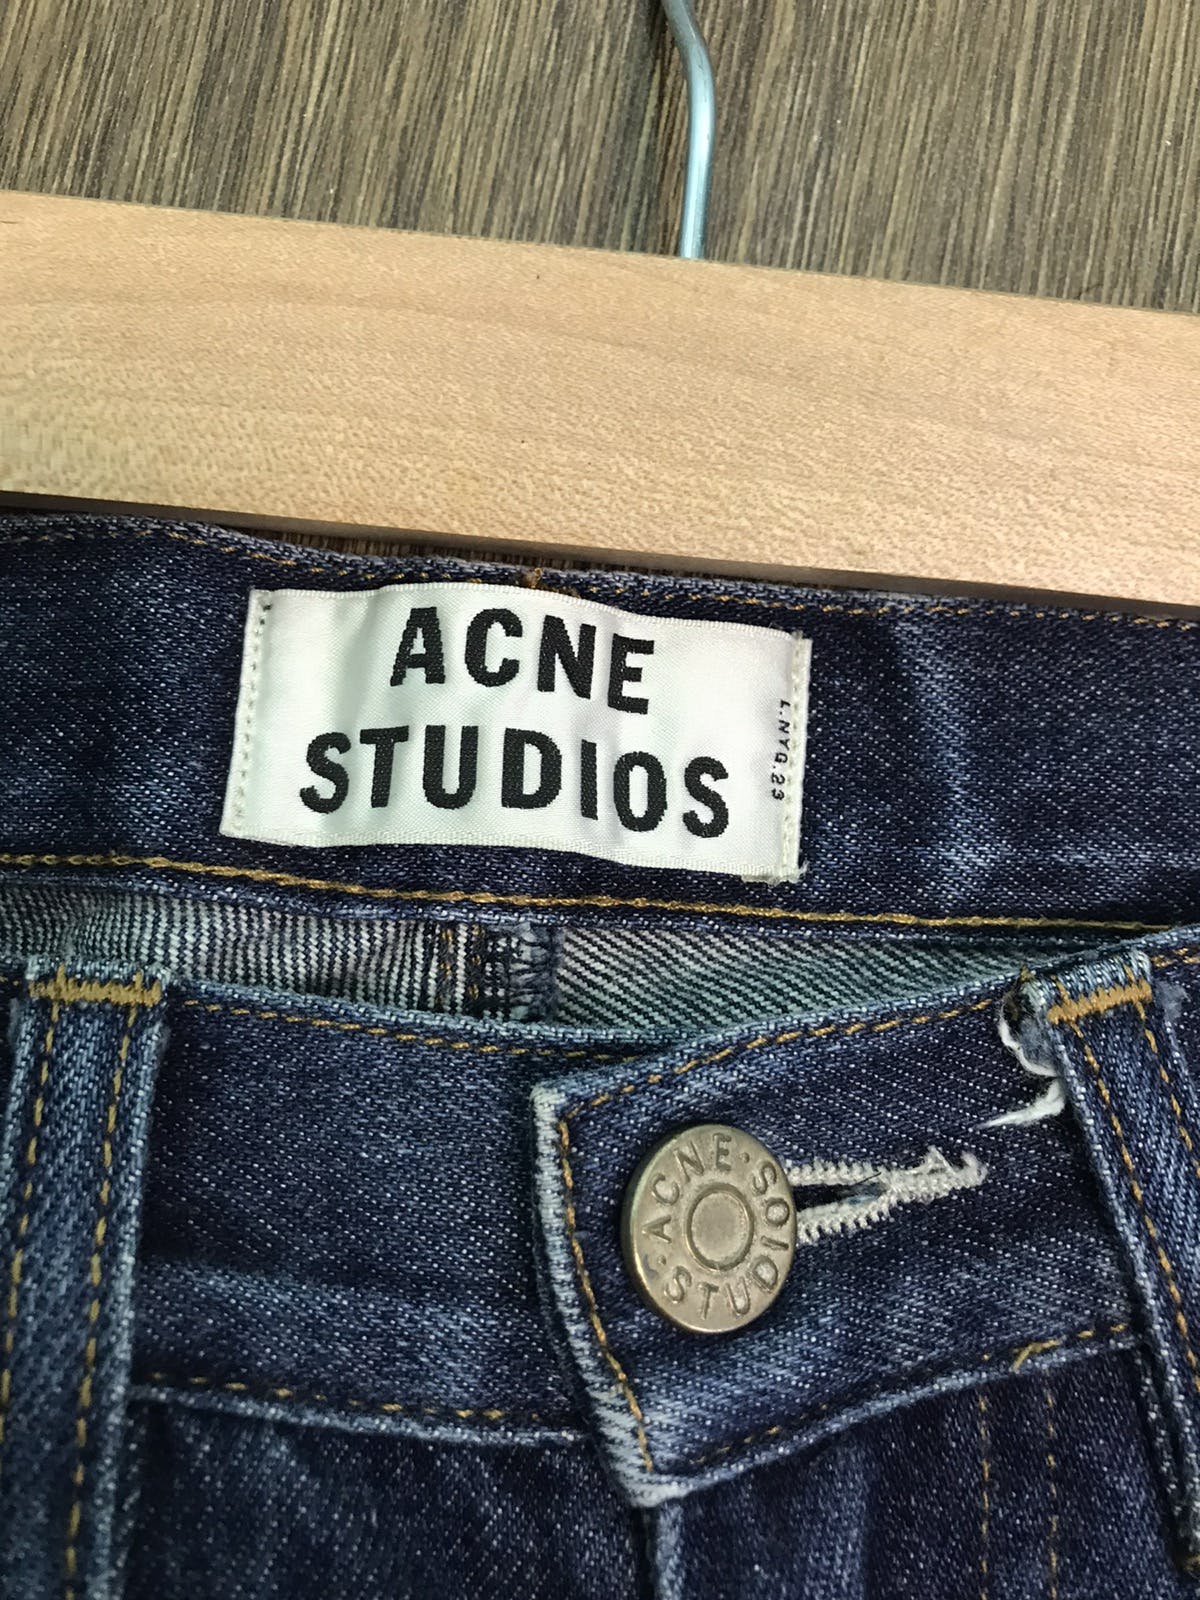 Acne Studios stickholm Denim Jeans - 12